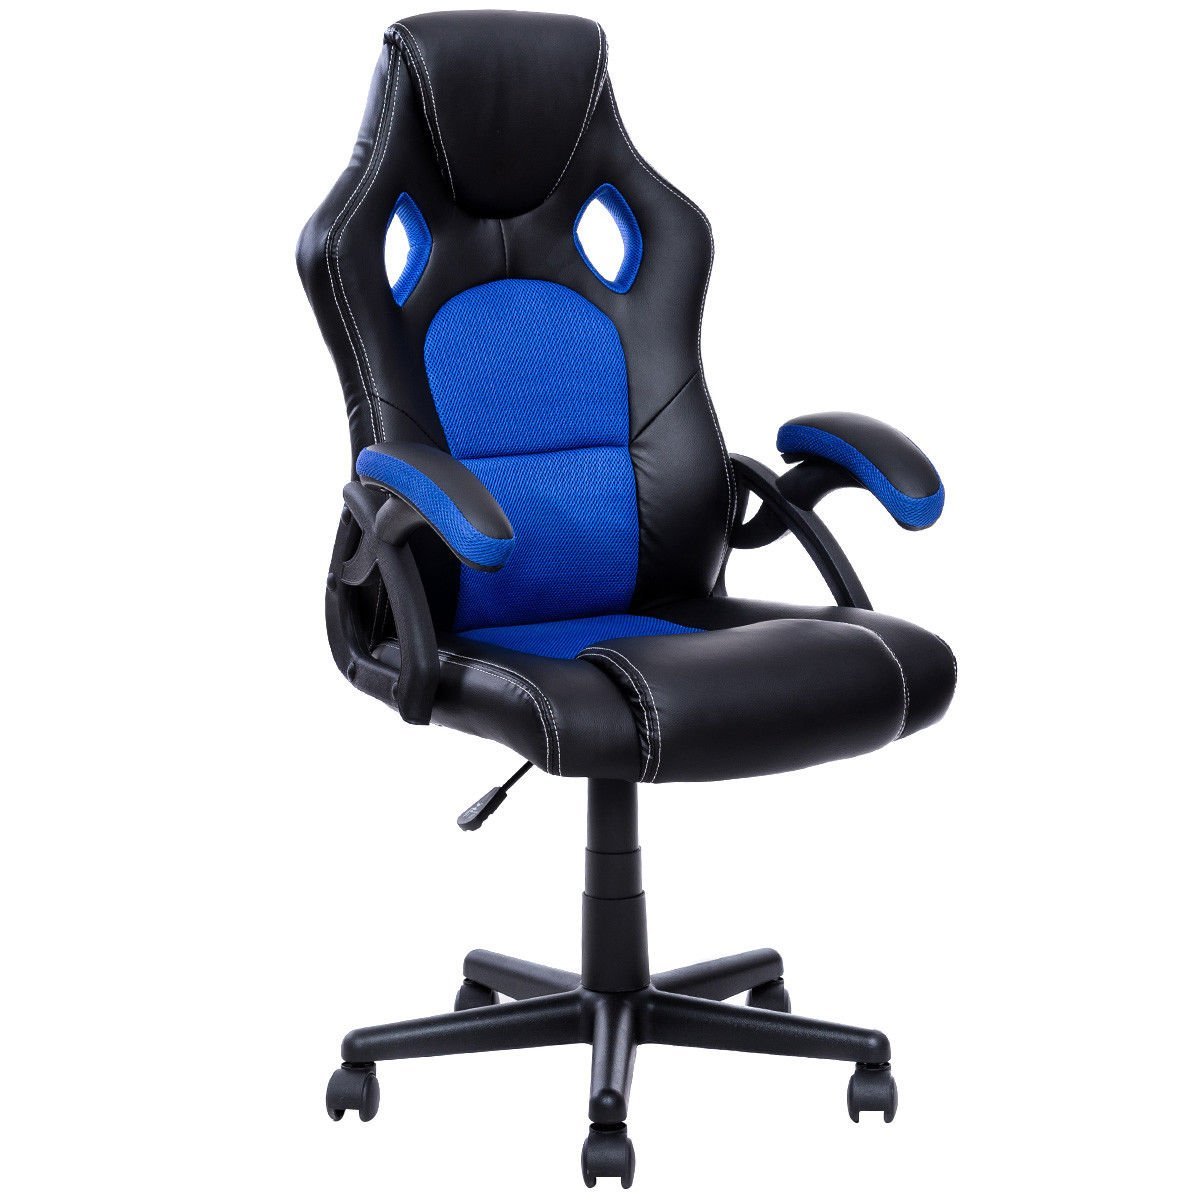 Giantex PU Leather Executive Bucket Seat Racing Style Office Chair